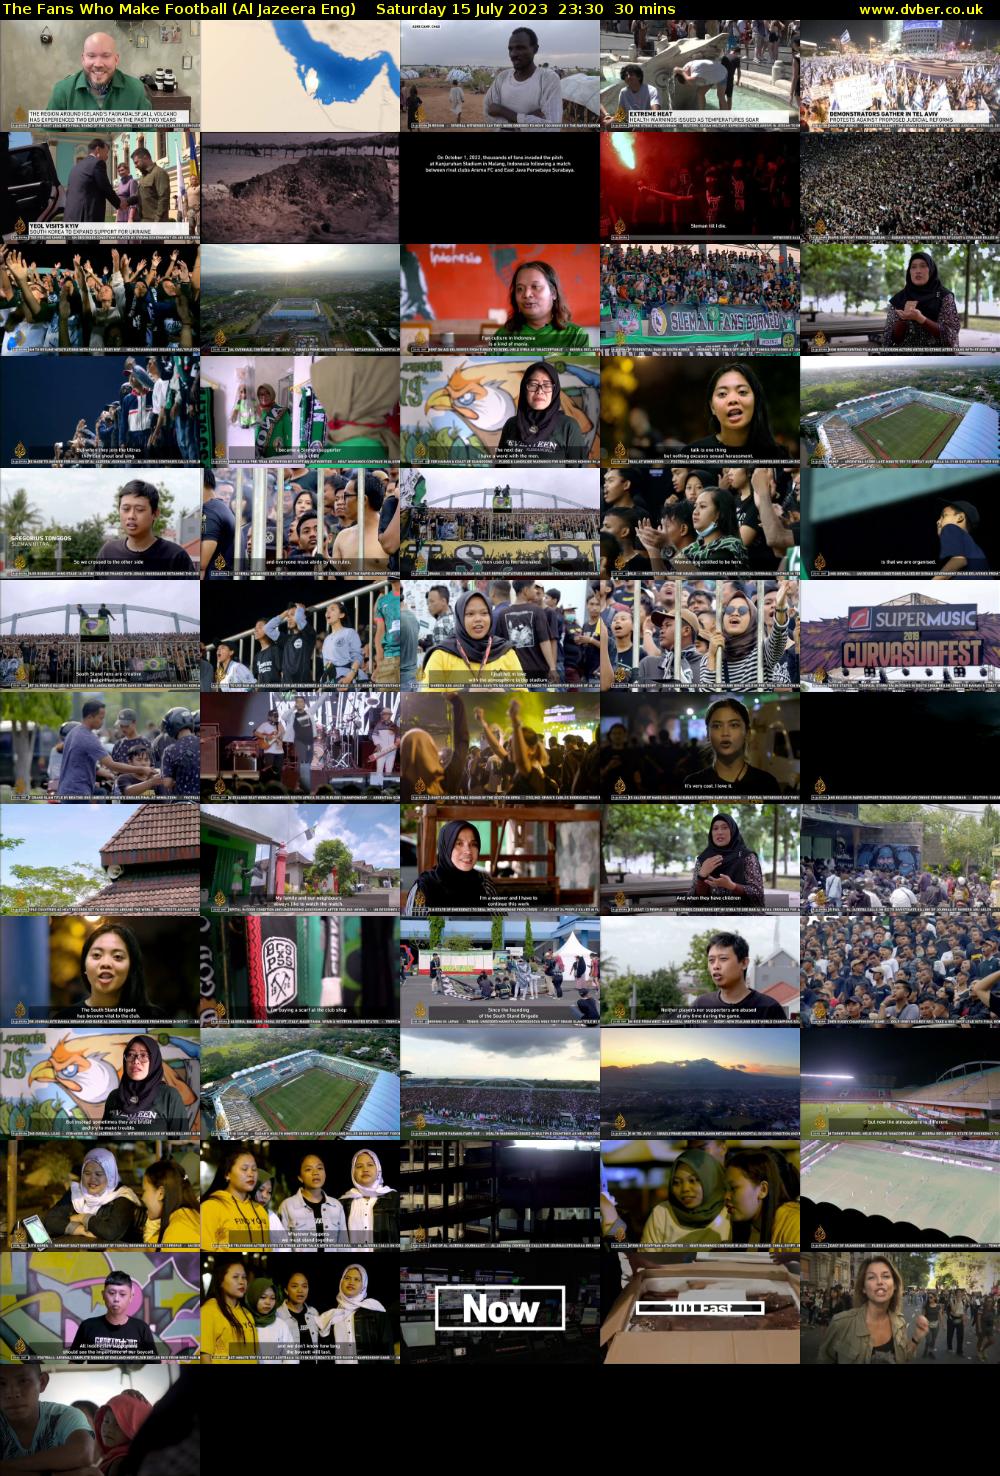 The Fans Who Make Football (Al Jazeera Eng) Saturday 15 July 2023 23:30 - 00:00